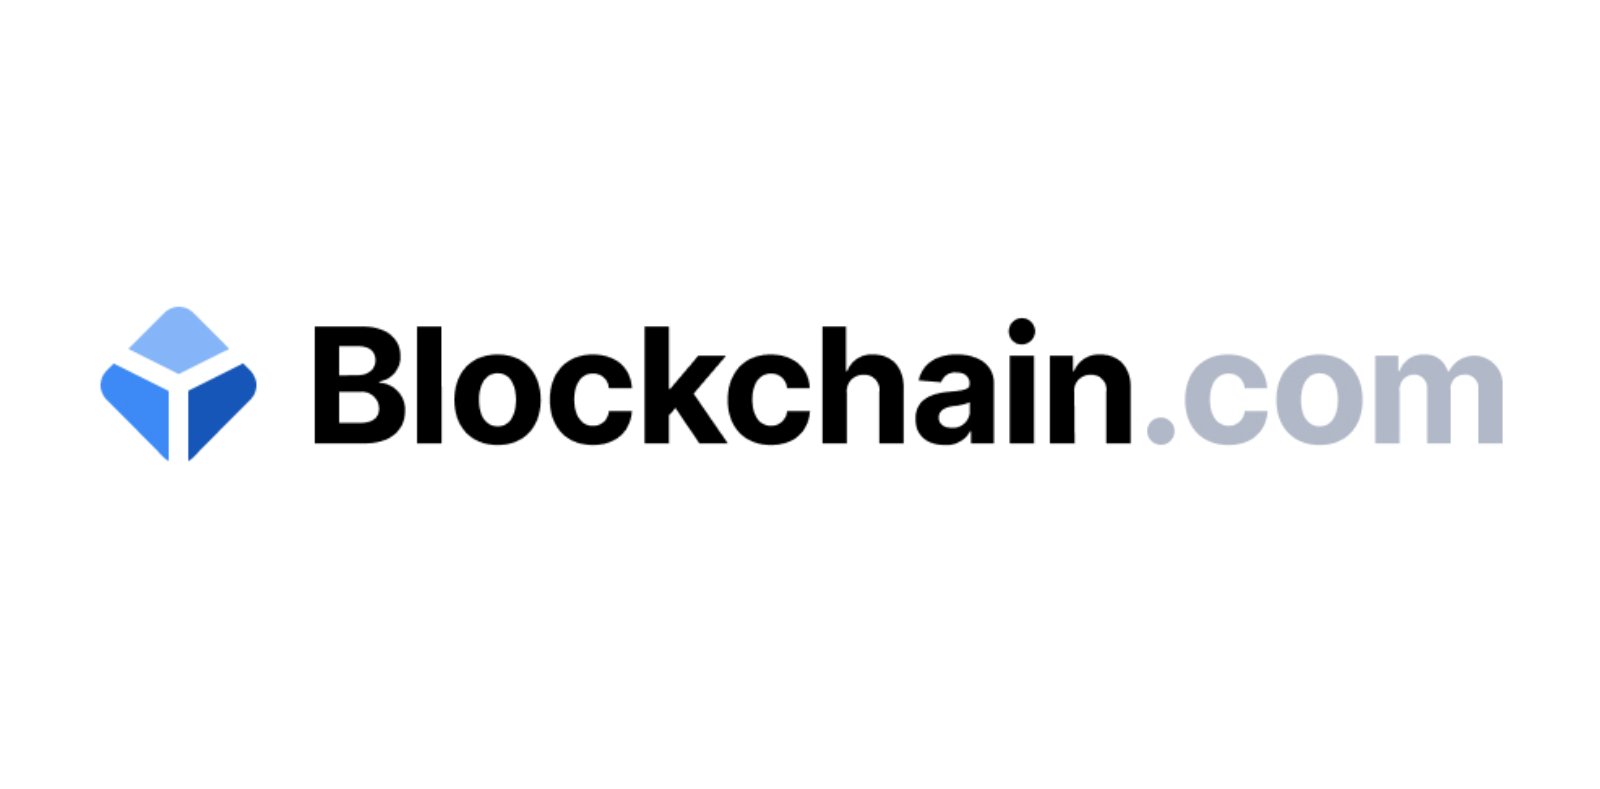 Blockchain.com CEO Reveals Potential $270M Loss Due to Three Arrows Capital Exposure thumbnail